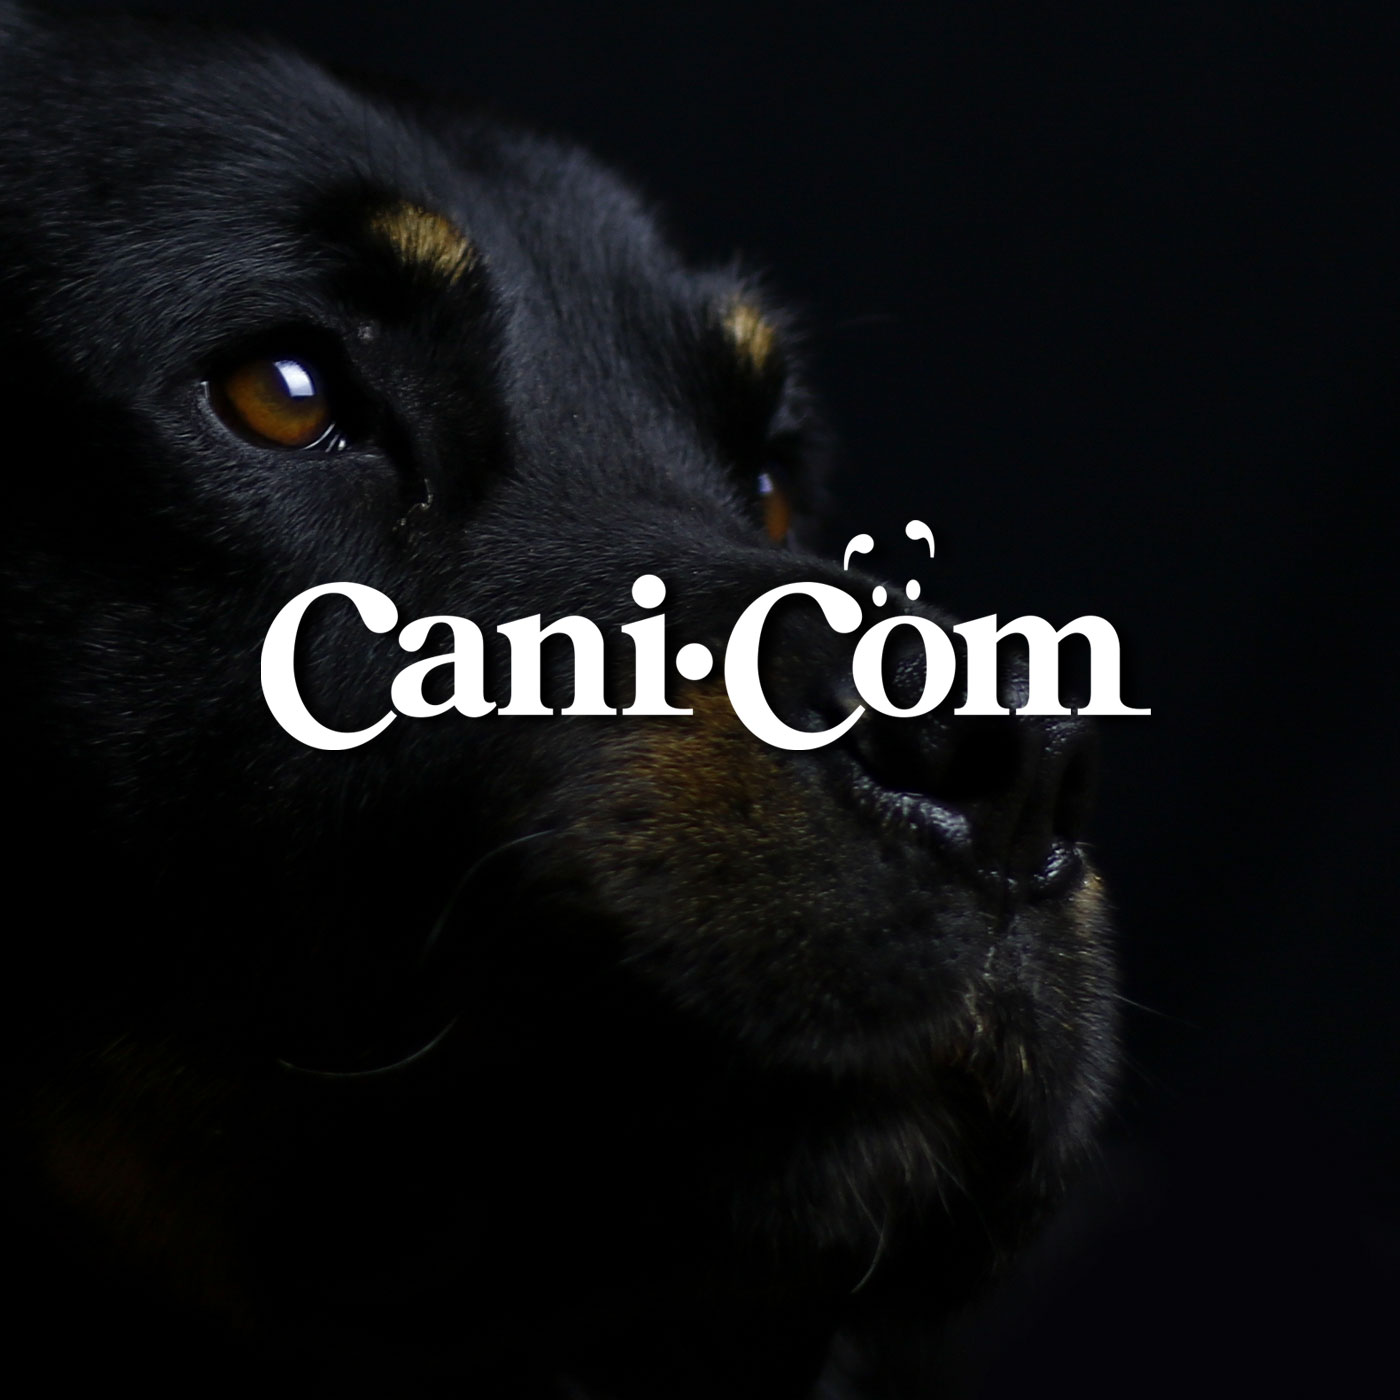 Cani.com